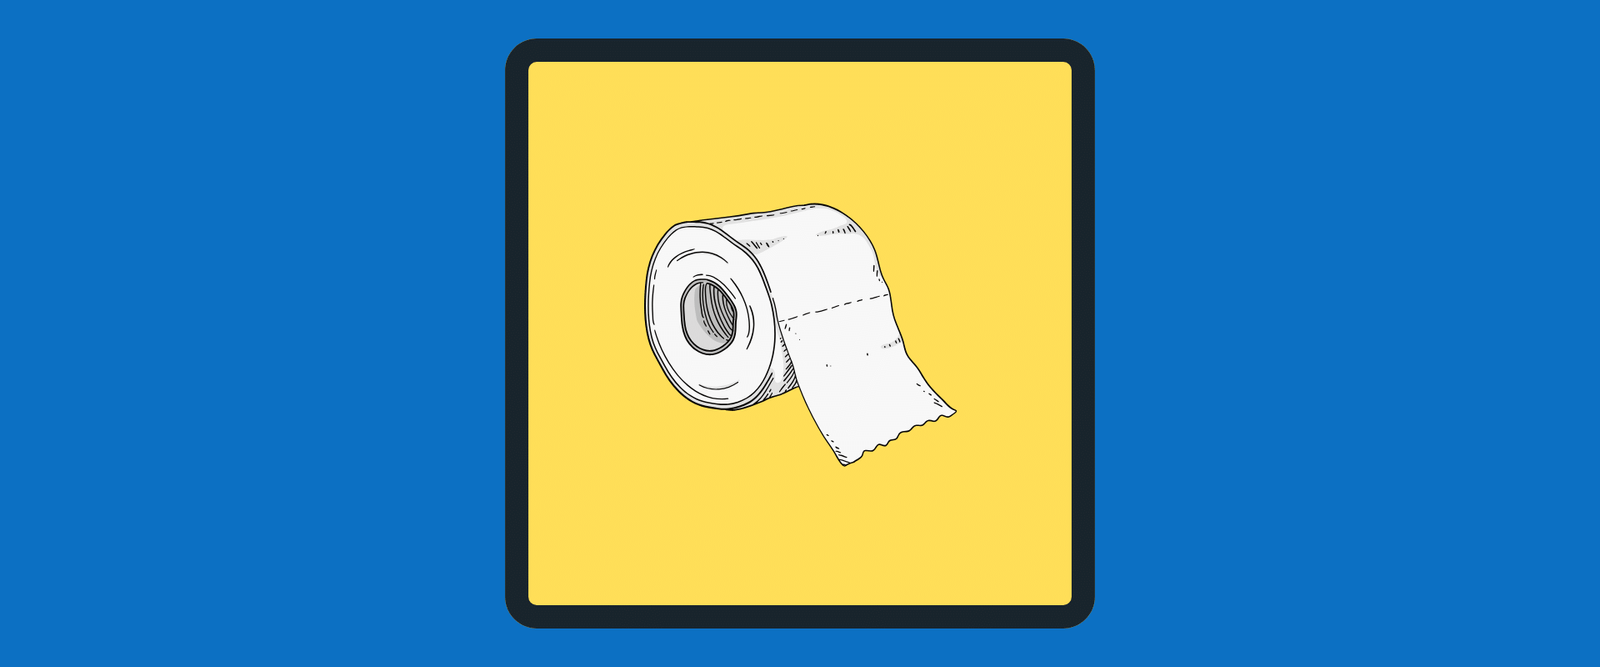 Best Toilet Paper Alternatives - Best Sellers